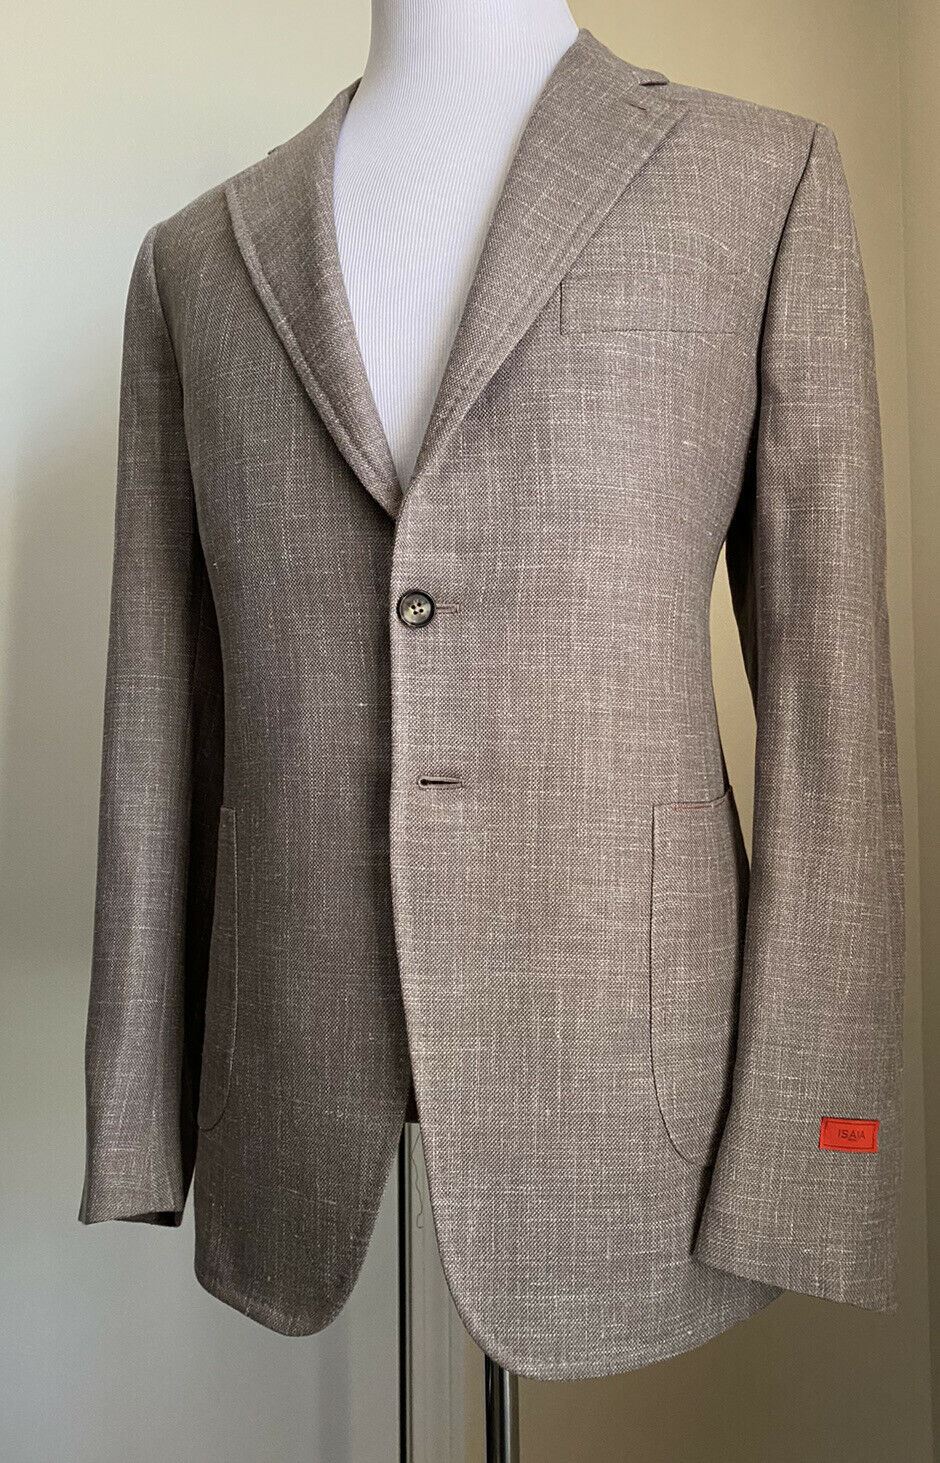 NWT $3700 Isaia Men’s Jacket Blazer Light Brown 46R US ( 56R Eu ) Italy